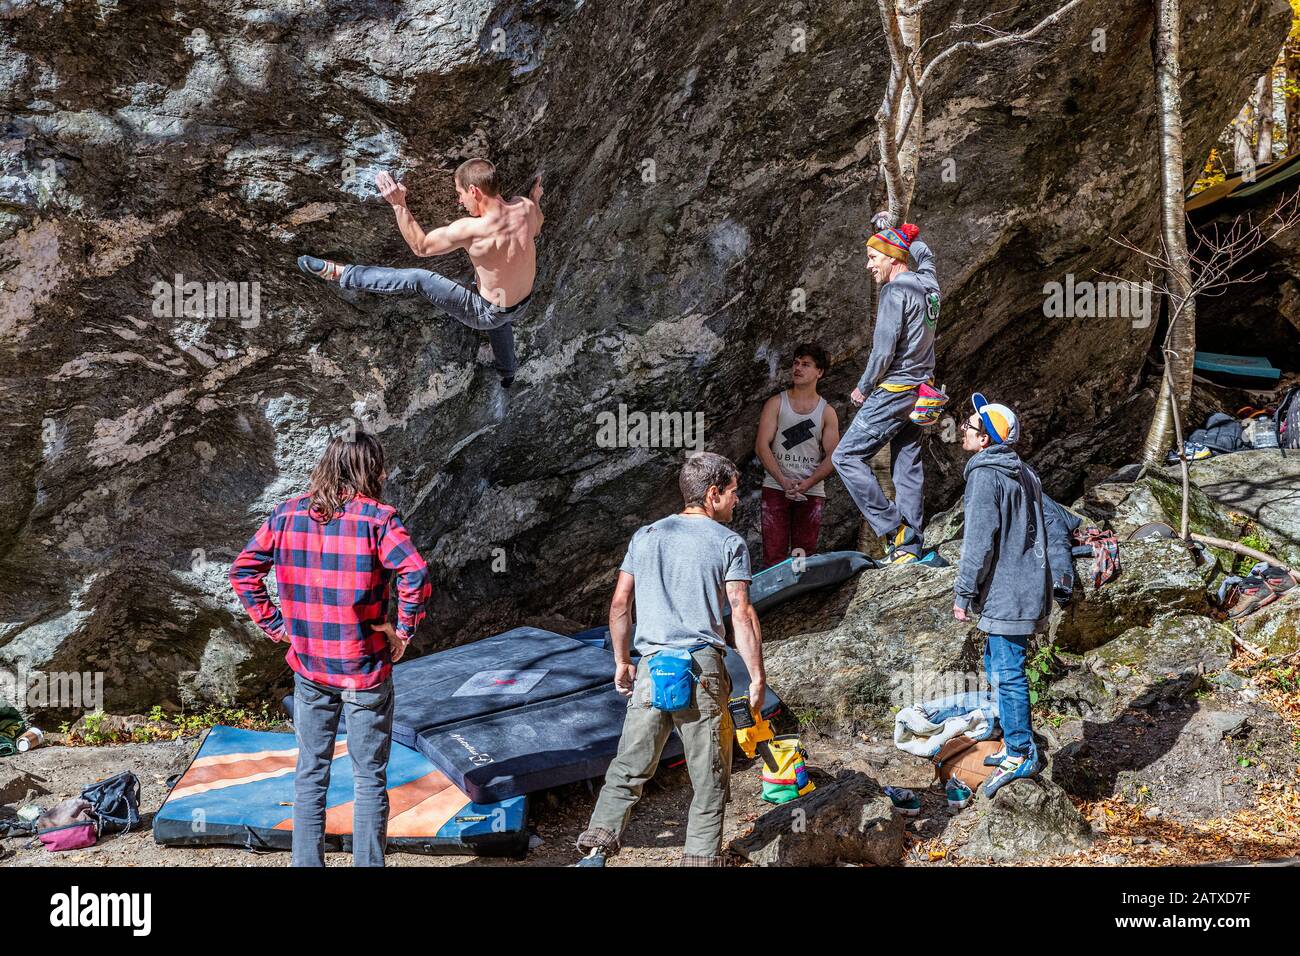 Guys practice rock climbing on natural boulder at Smuggler's Notch State Park. Stock Photo